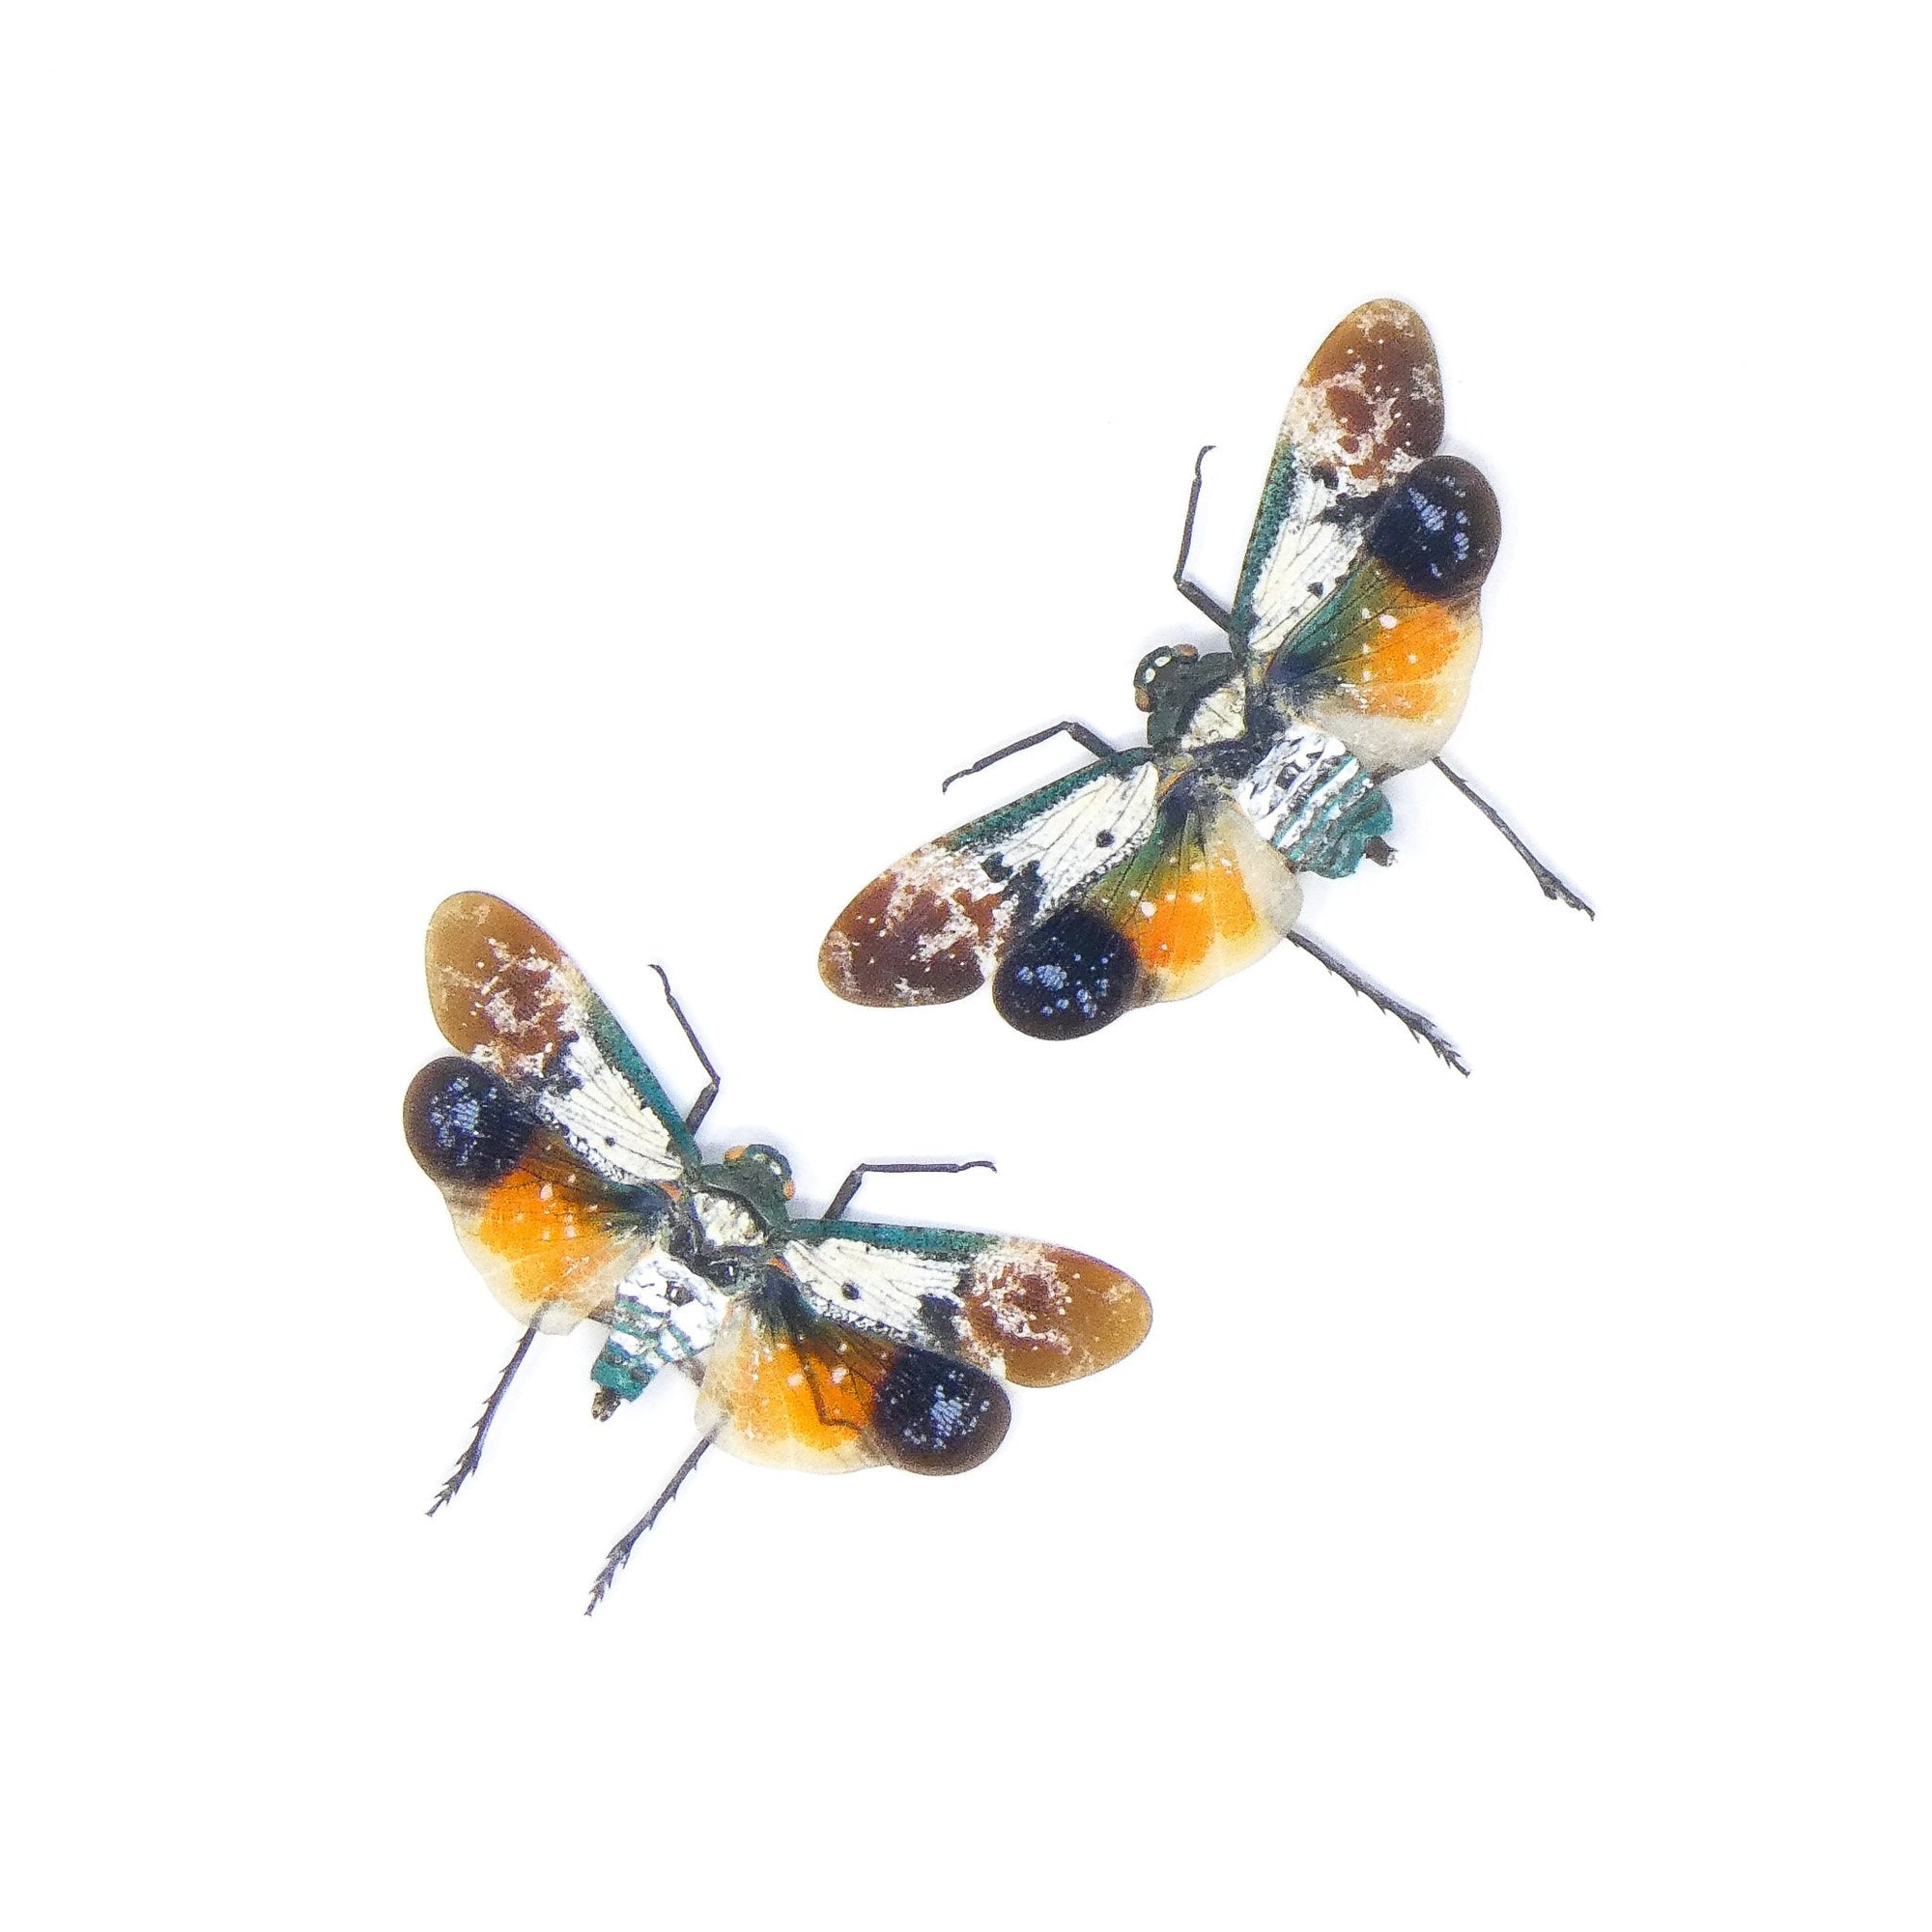 Two (2) Penthicodes farinosa borneo (spread) Dry-preserved Lanternfly Fulgoridae, A1 Entomology Specimens